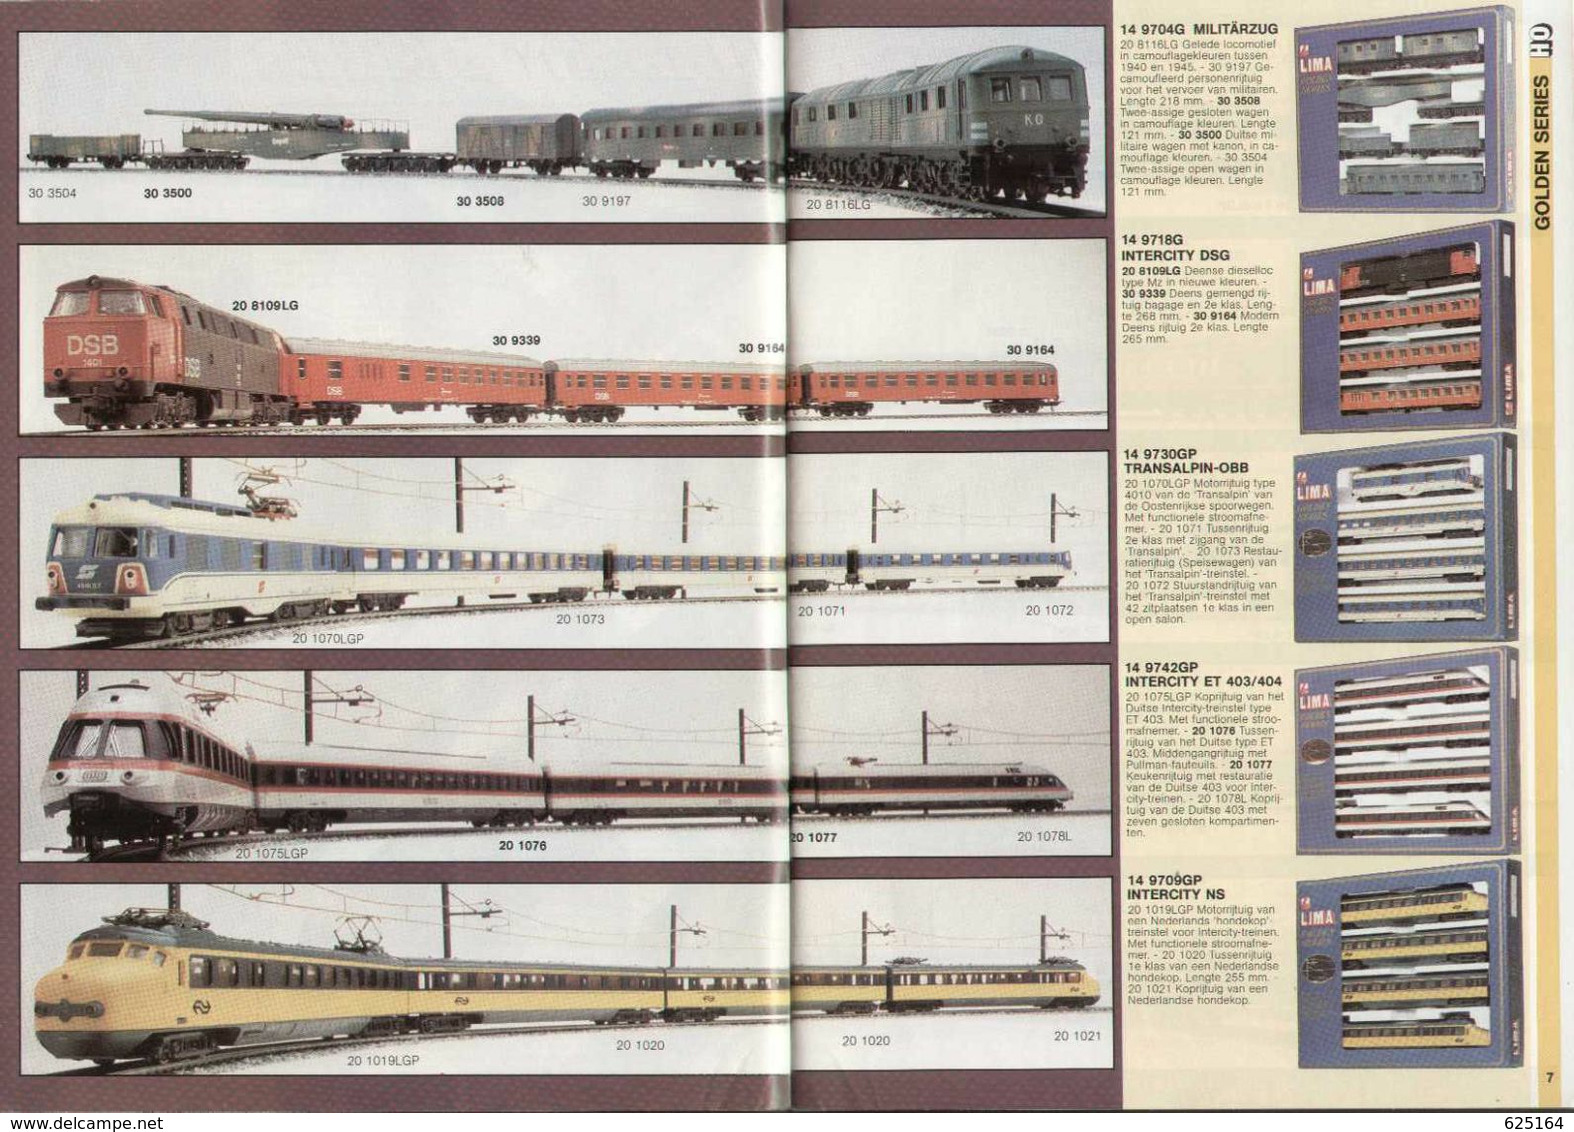 Catalogue LIMA 1983/84 Treinen - Nederlandse Uitgave - Schaal HO/N - Nerlandés